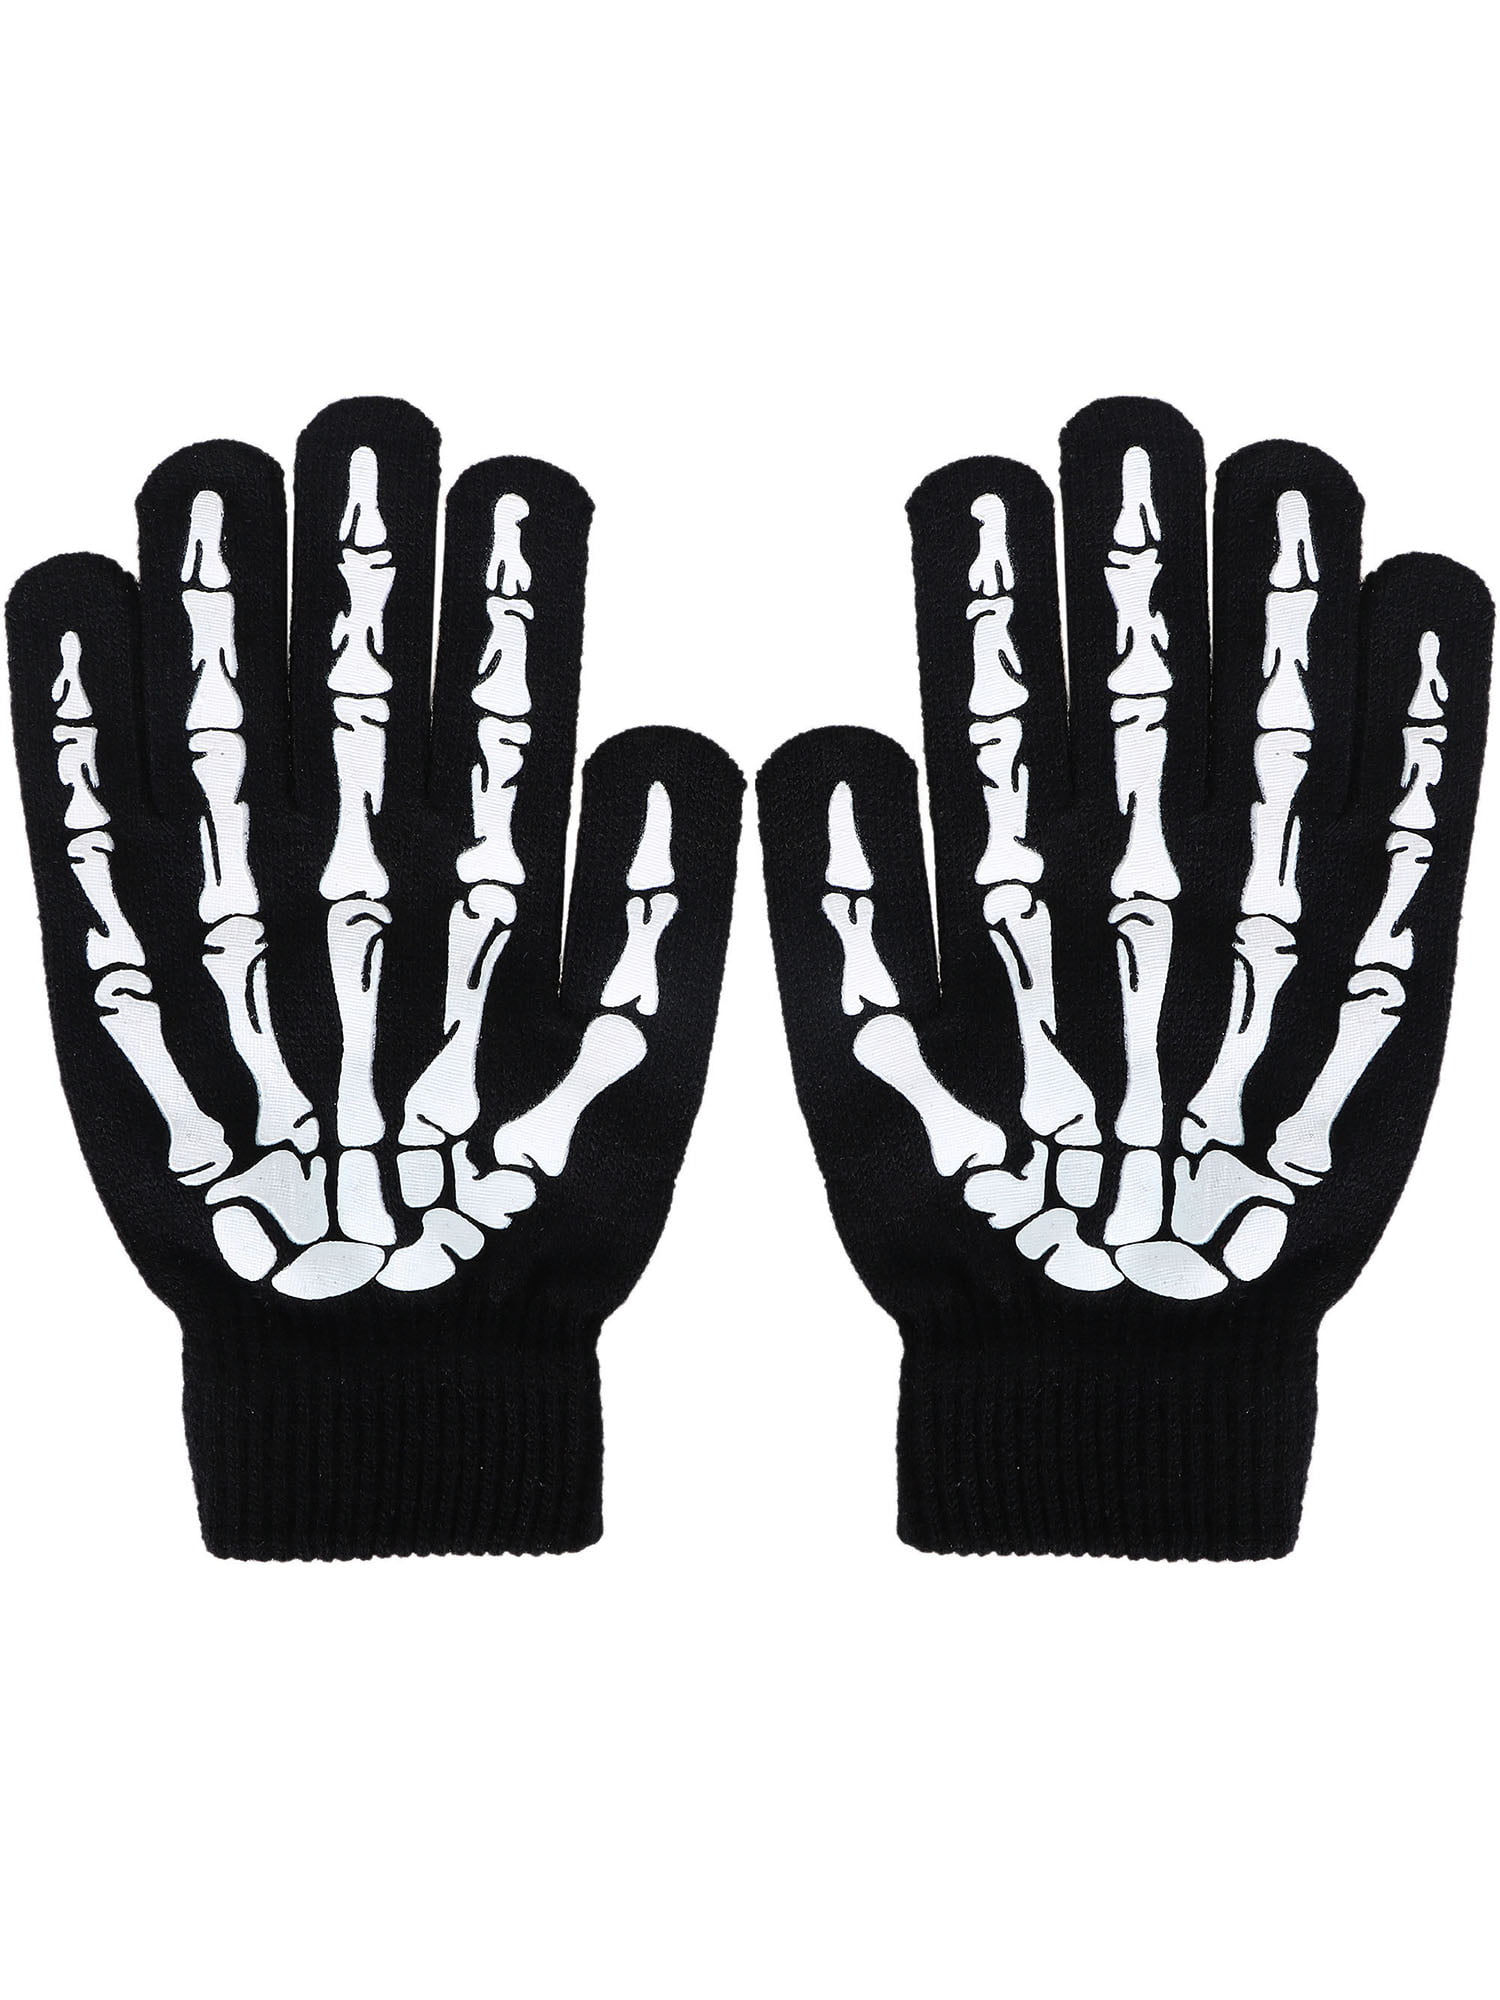 Gloves Child Skeleton Glow In Dark Latex Fingers 3-d Look Halloween Funworld